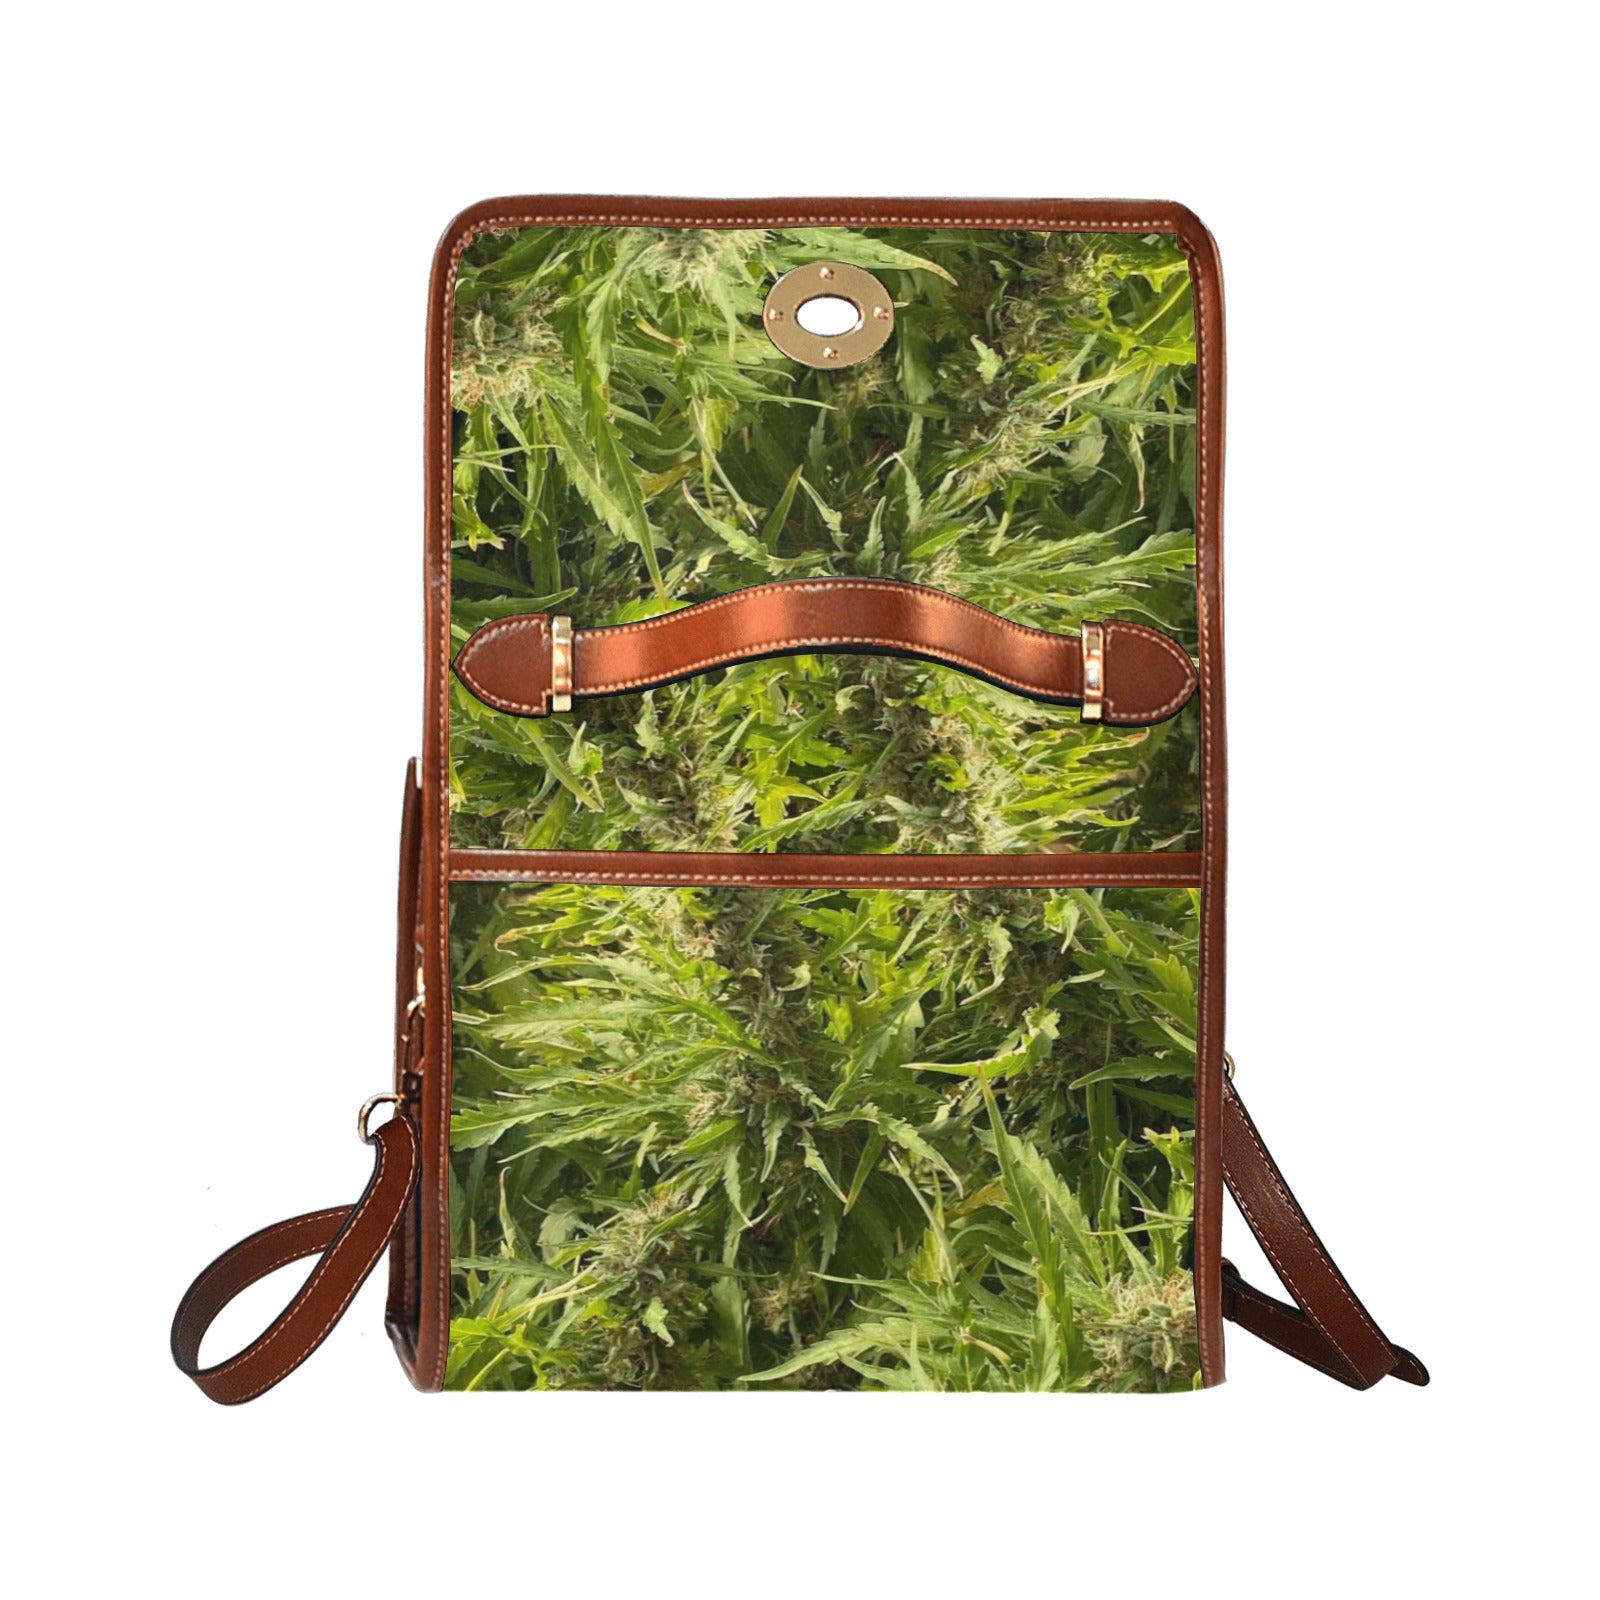 fz weed hand bag all over print waterproof canvas bag(model1641)(brown strap)